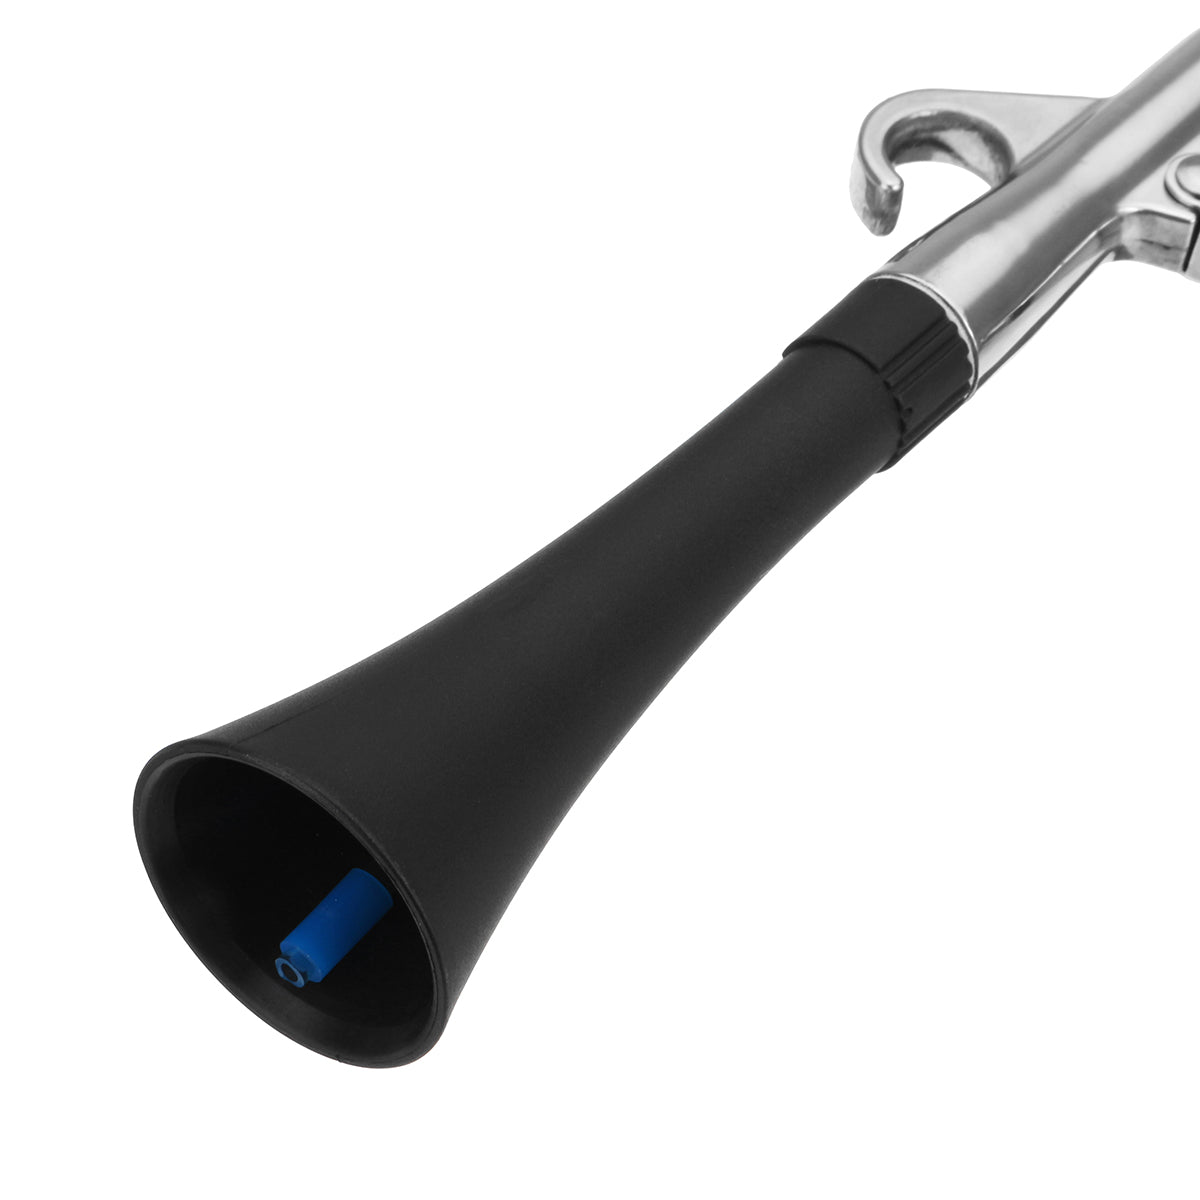 Air Blow Wash Lance Brush Interior Cleaner Spray Tool Kit For Car SUV RV - Auto GoShop